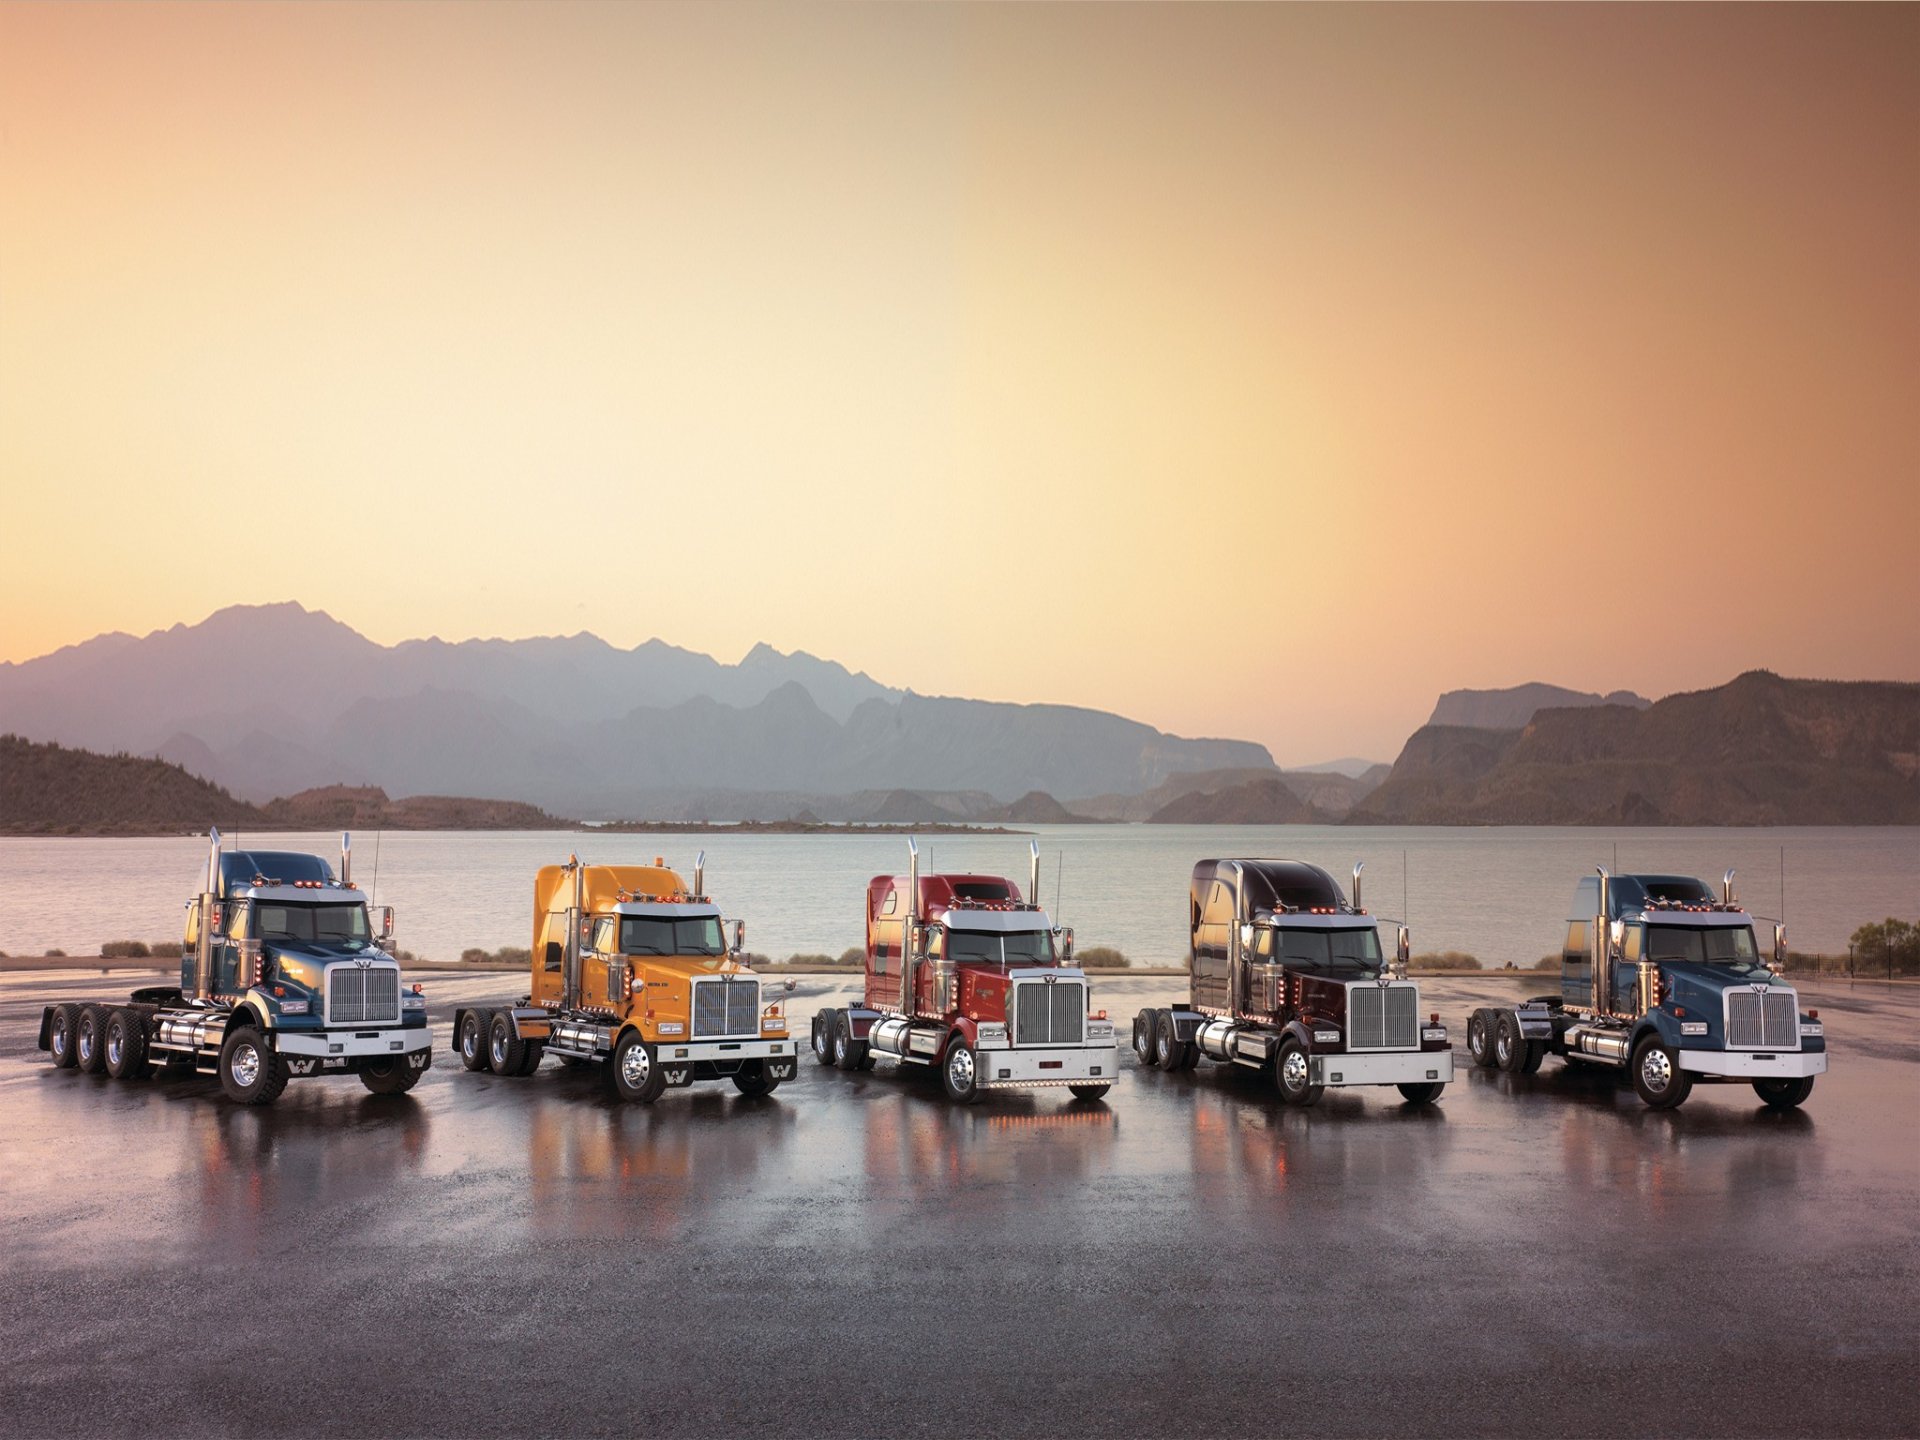 Пять грузовиков стоят на фоне залива и гор Обои на рабочий стол.